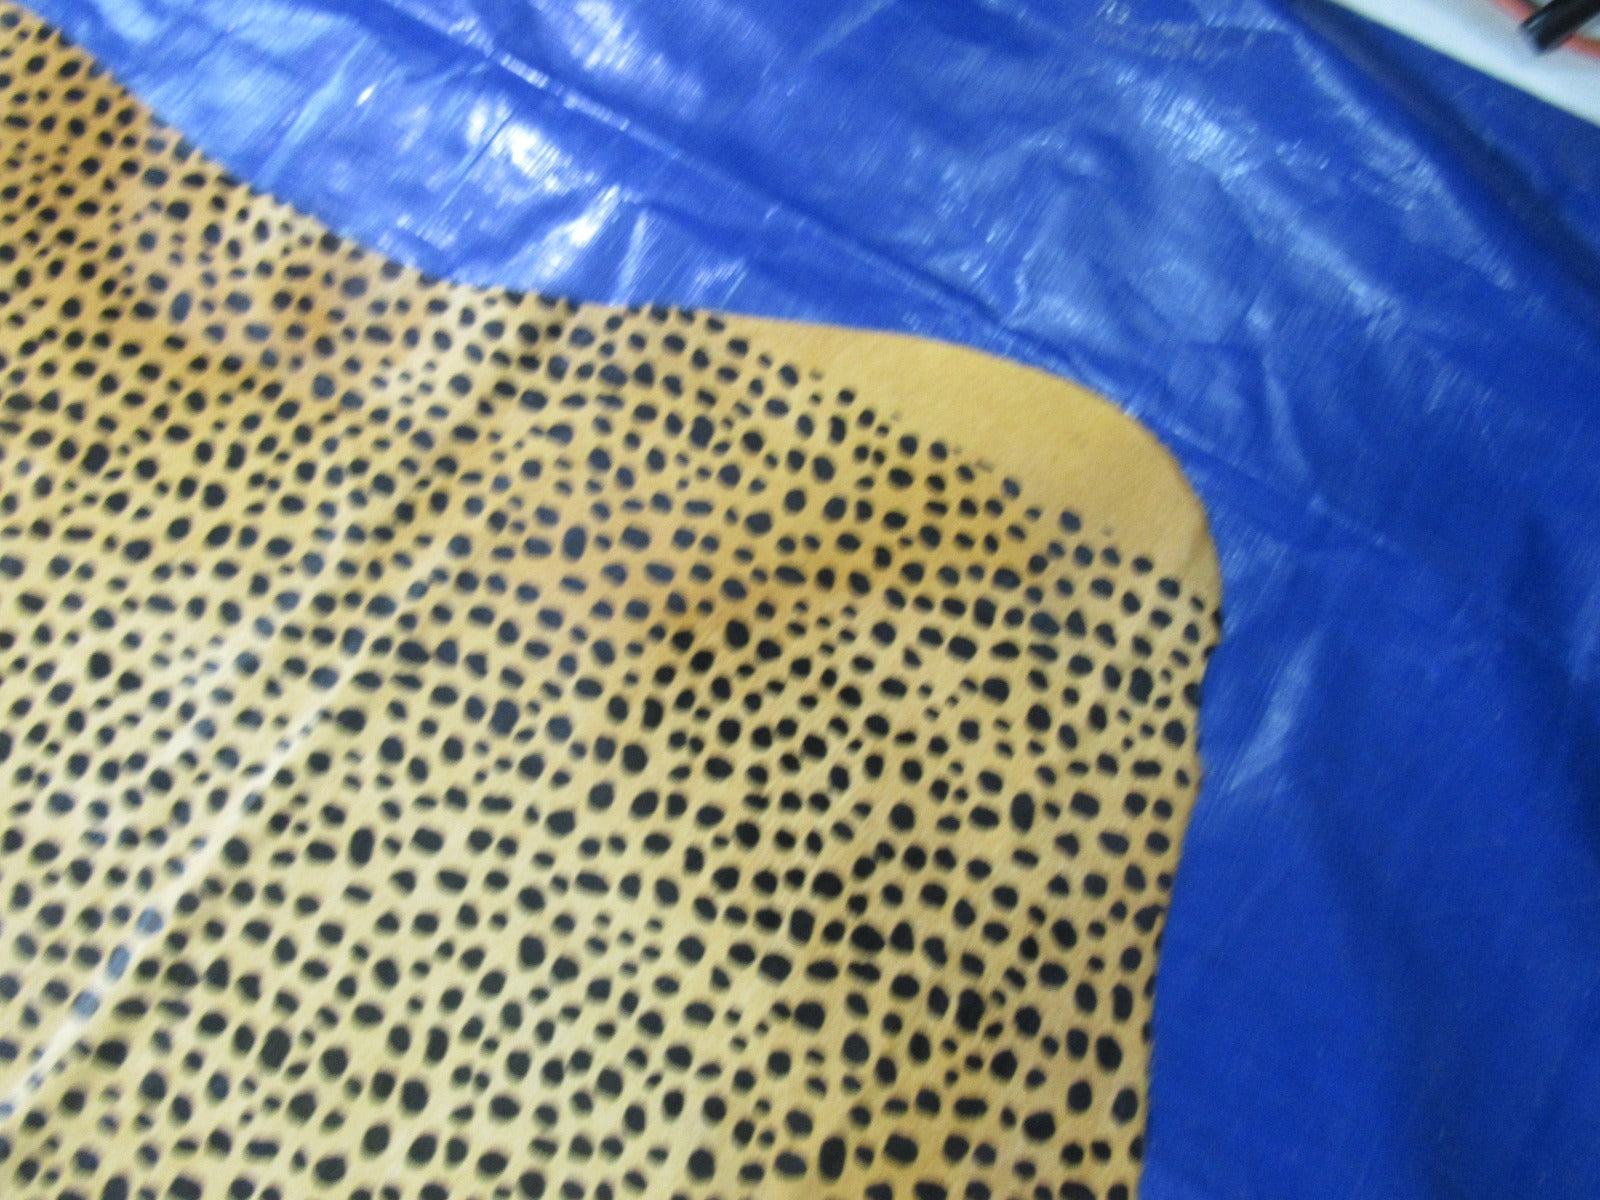 Cheetah Print Cowhide Rug (golden background) - Size: 7.5x6 feet O-274